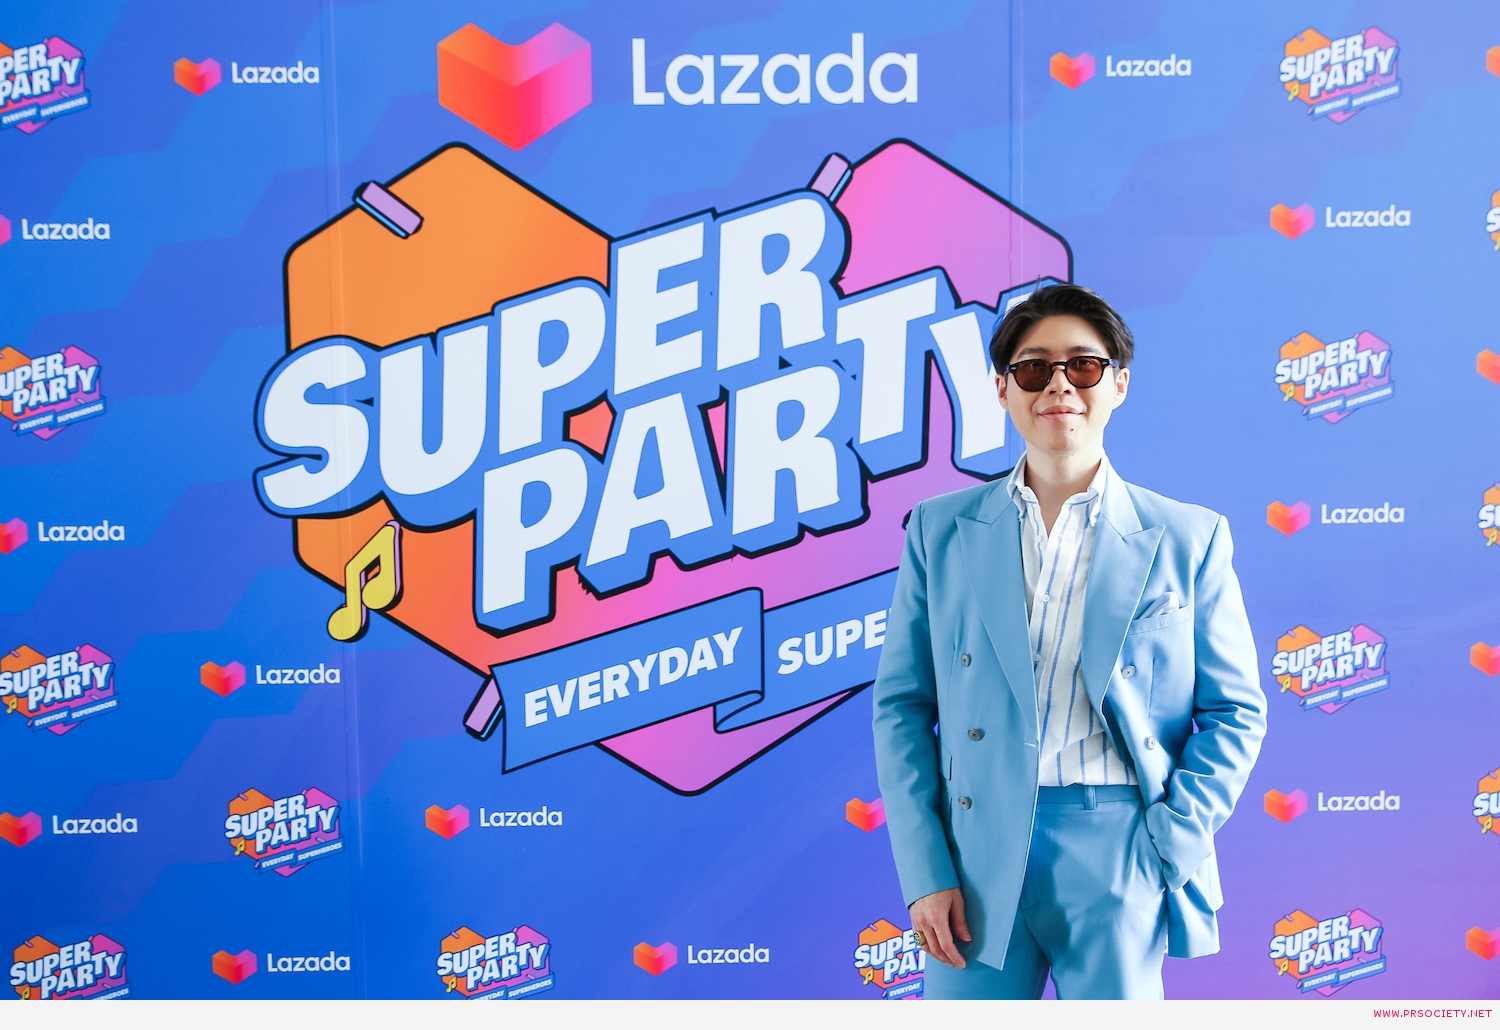 Atom_Lazada Super Party (2)